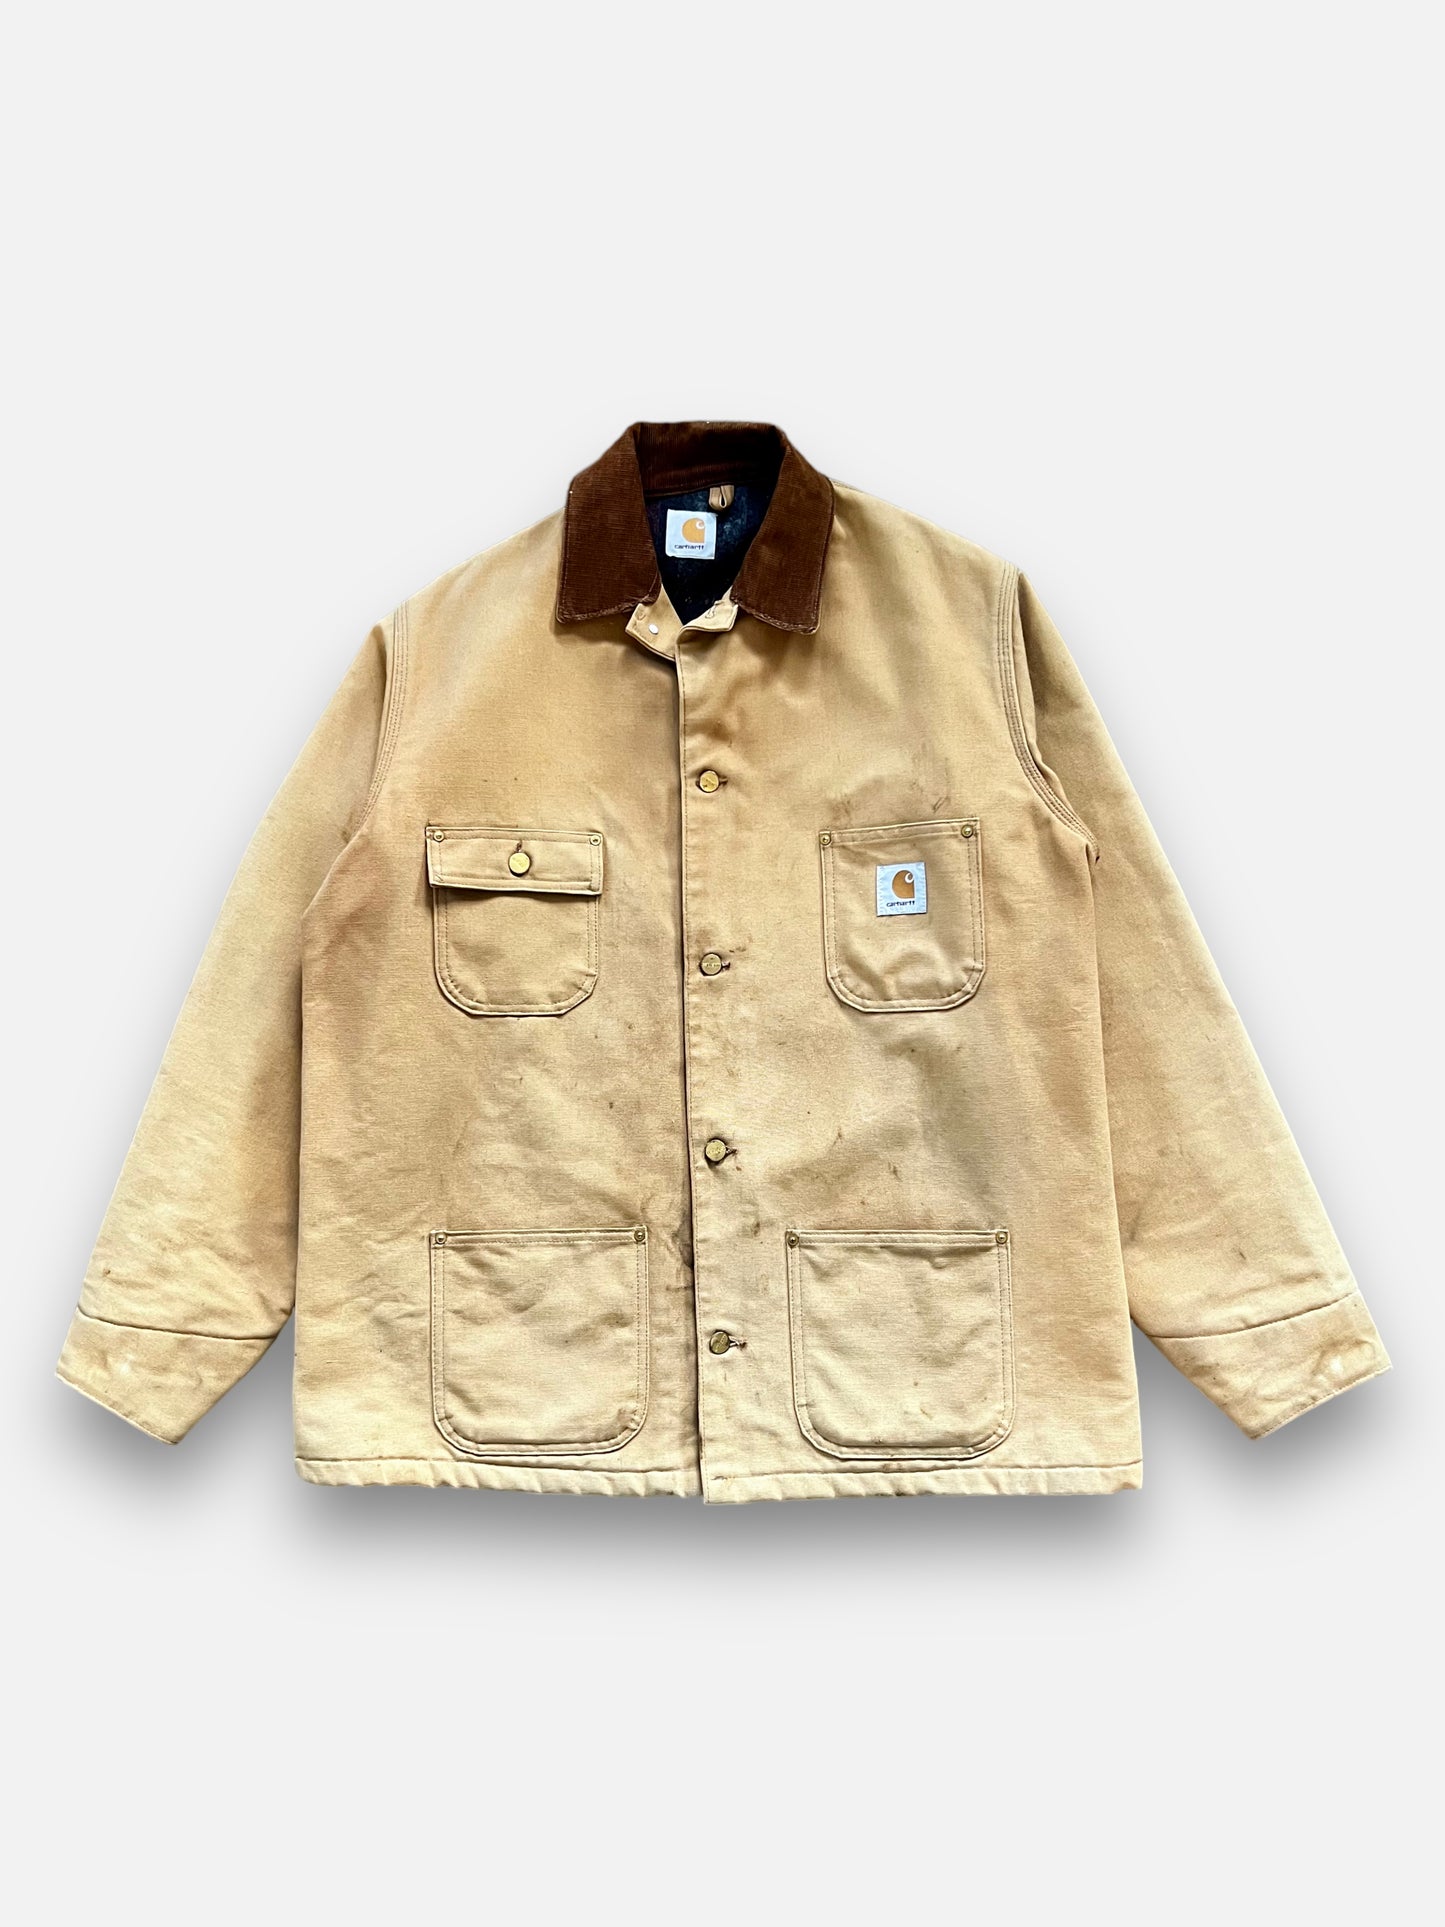 00s Carhartt Chore Jacket (XL)